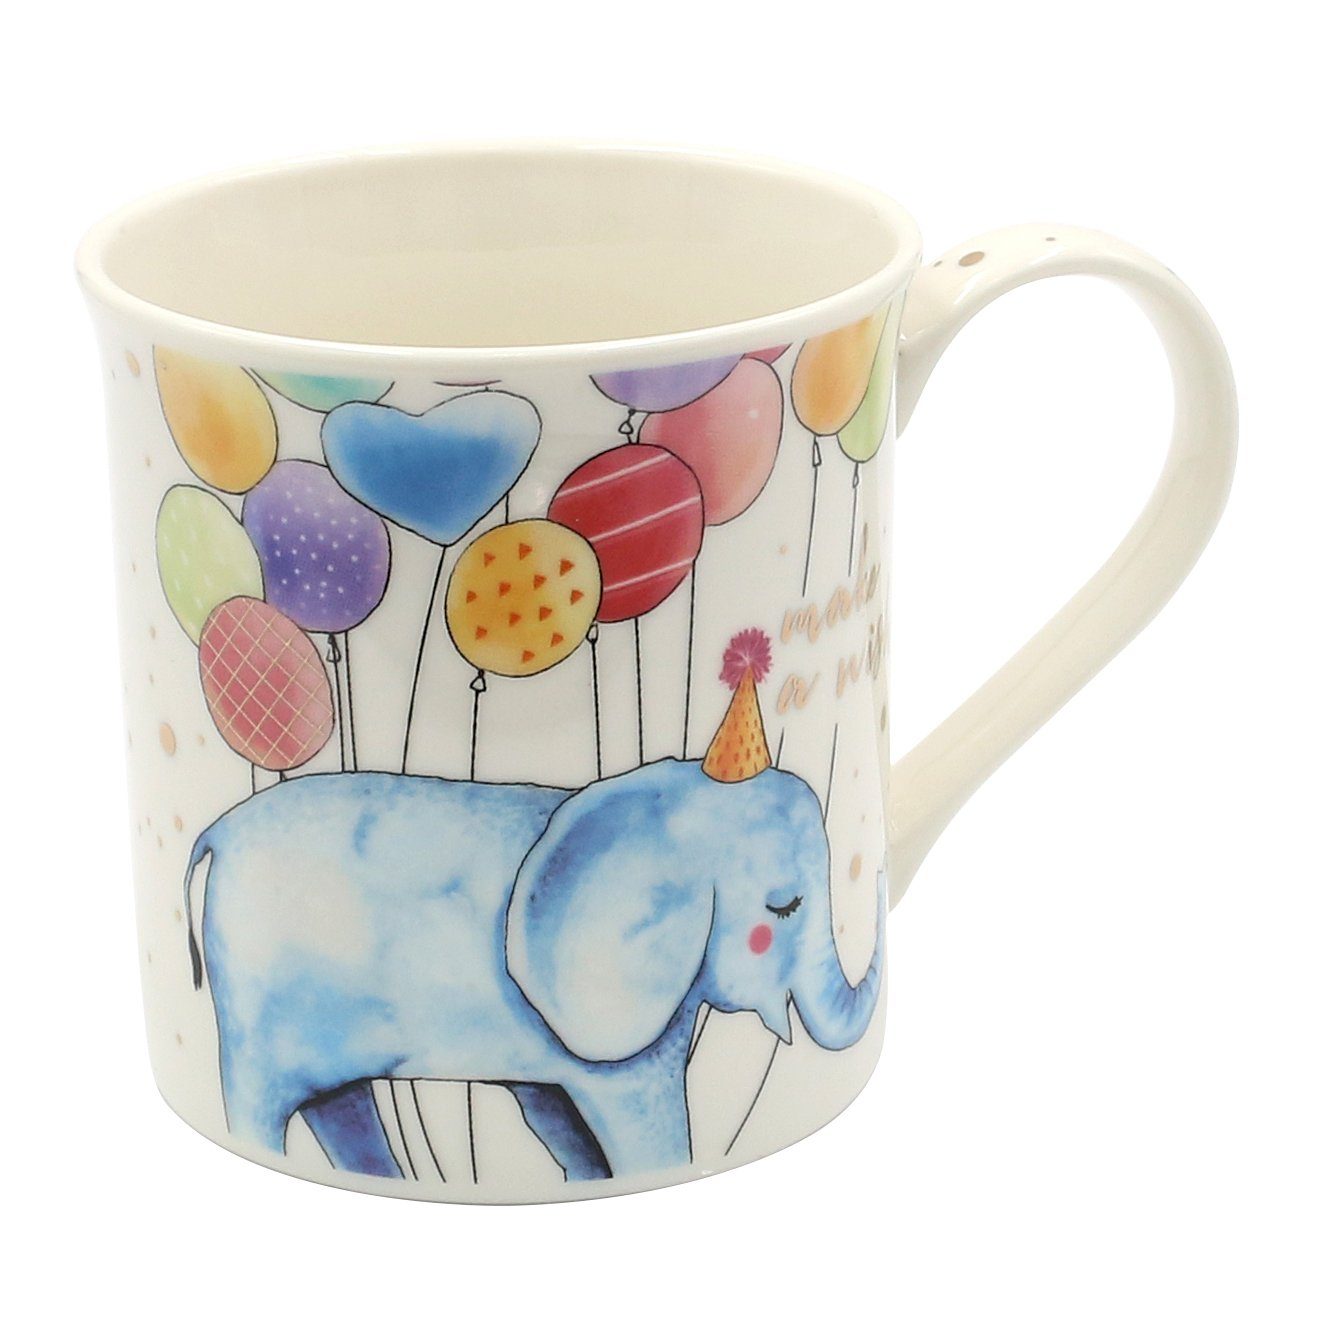 Dekohelden24 Tasse Kaffeebecher Kaffeetasse aus Porzellan - Geburtstagstassen Giraffe, Porzellan blau